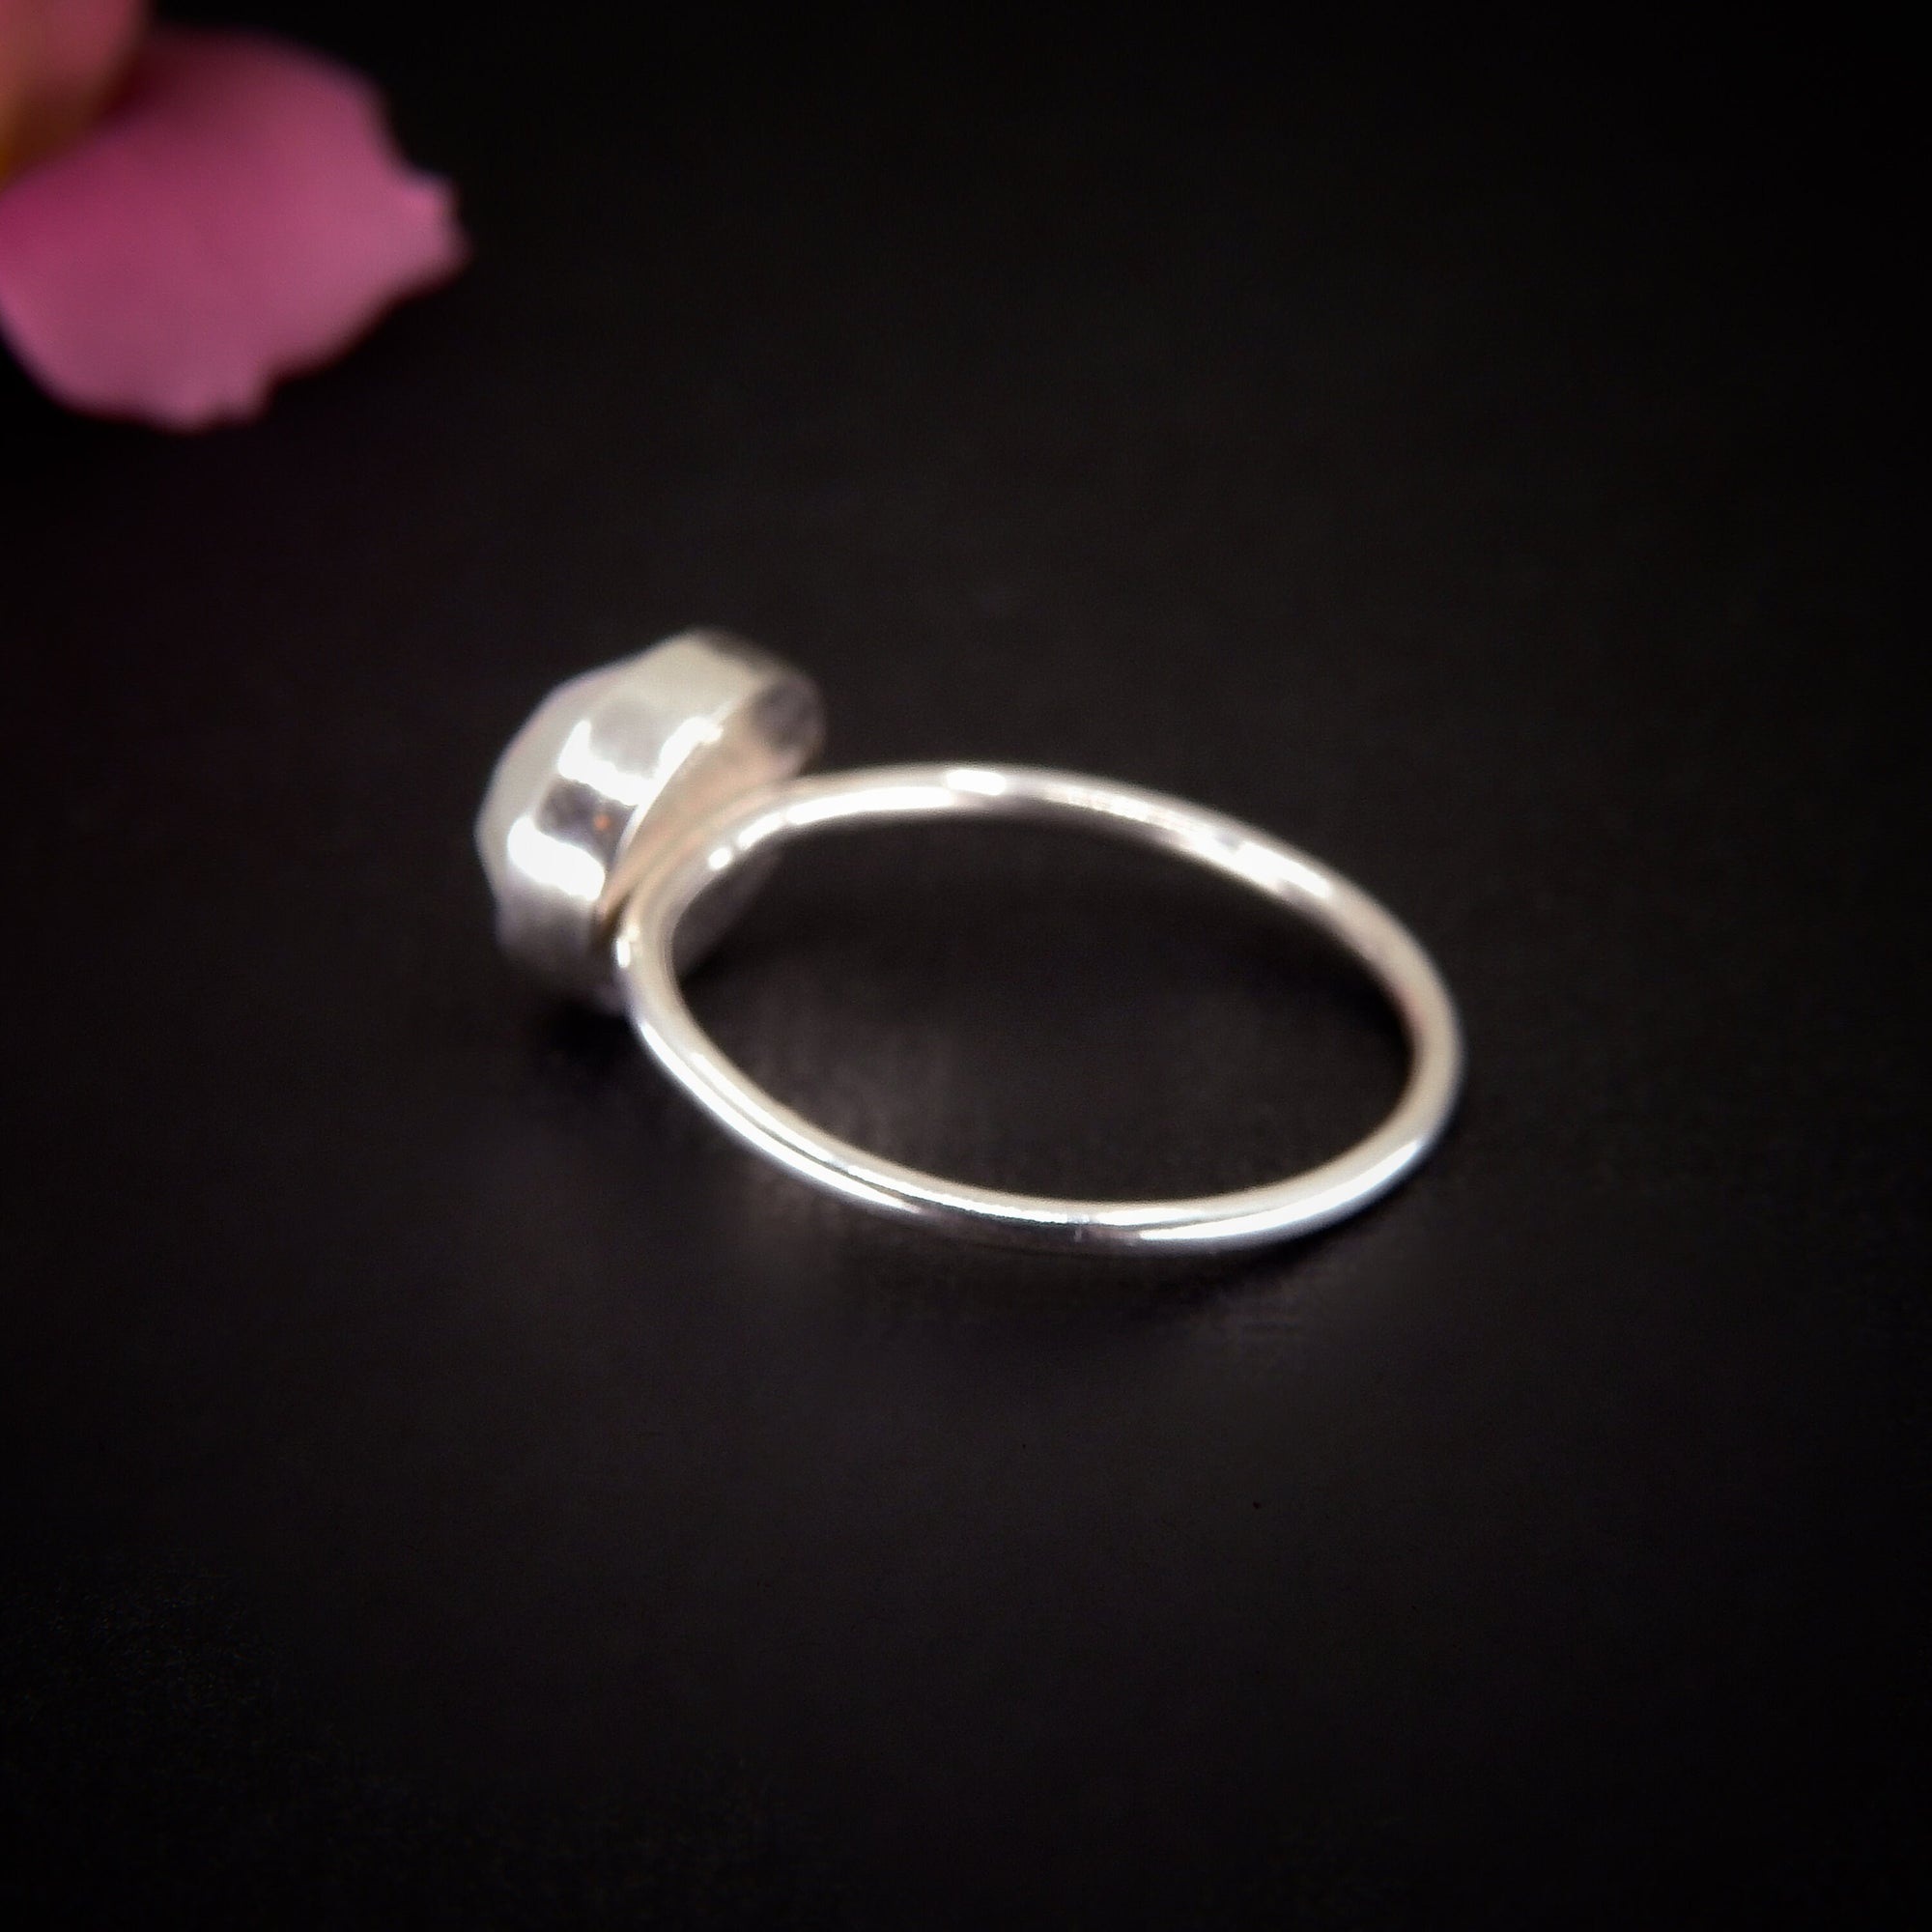 Rose Cut Moonstone Ring - Size 8 - Sterling Silver - Faceted Moonstone Ring - Dainty Rainbow Moonstone Ring - Oval Moonstone Jewellery OOAK